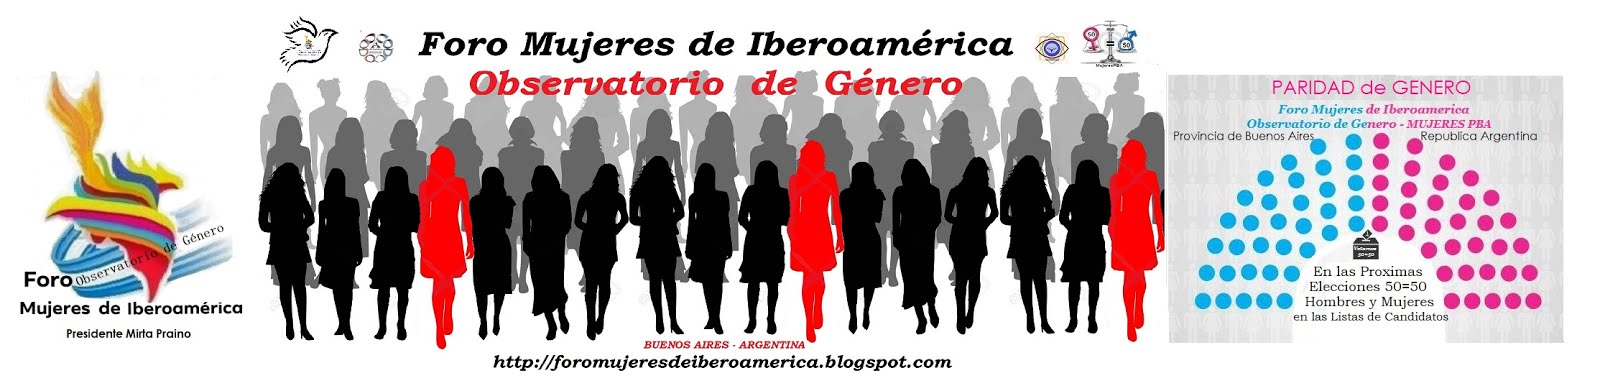 Foro Mujeres de Iberoamerica -                                 - Observatorio de Genero